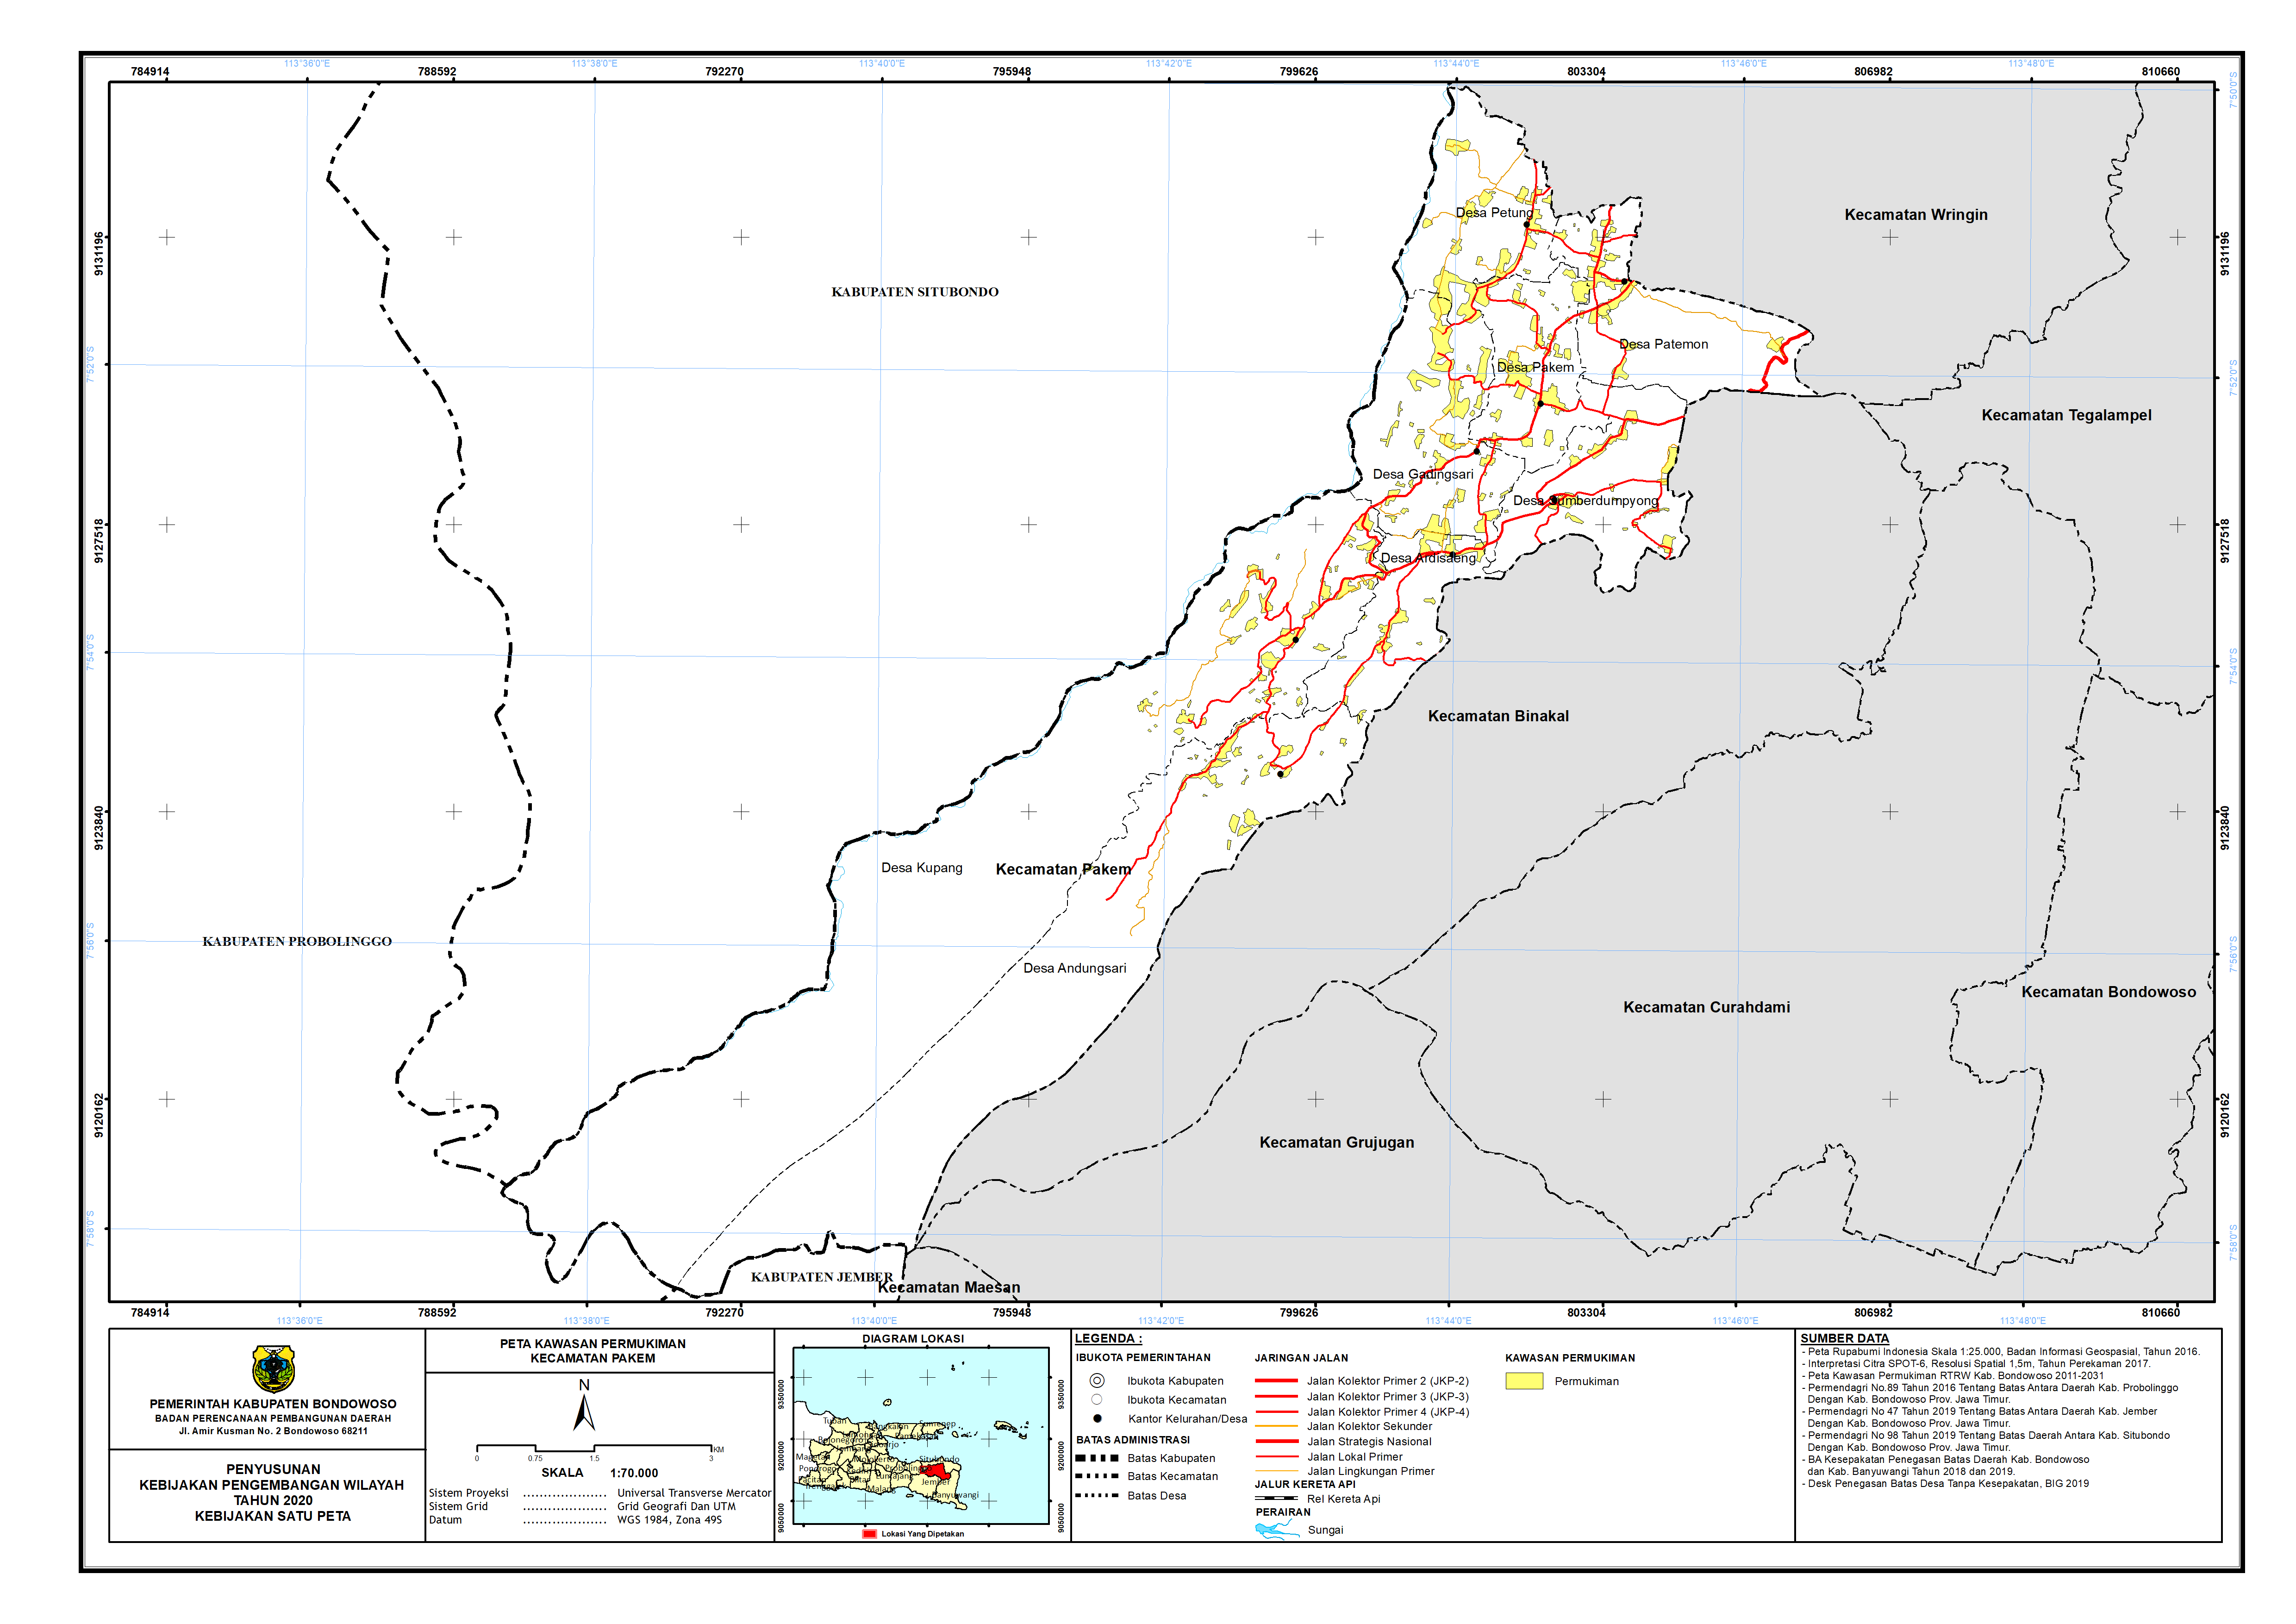 Peta Kawasan Permukiman Kecamatan Pakem.png